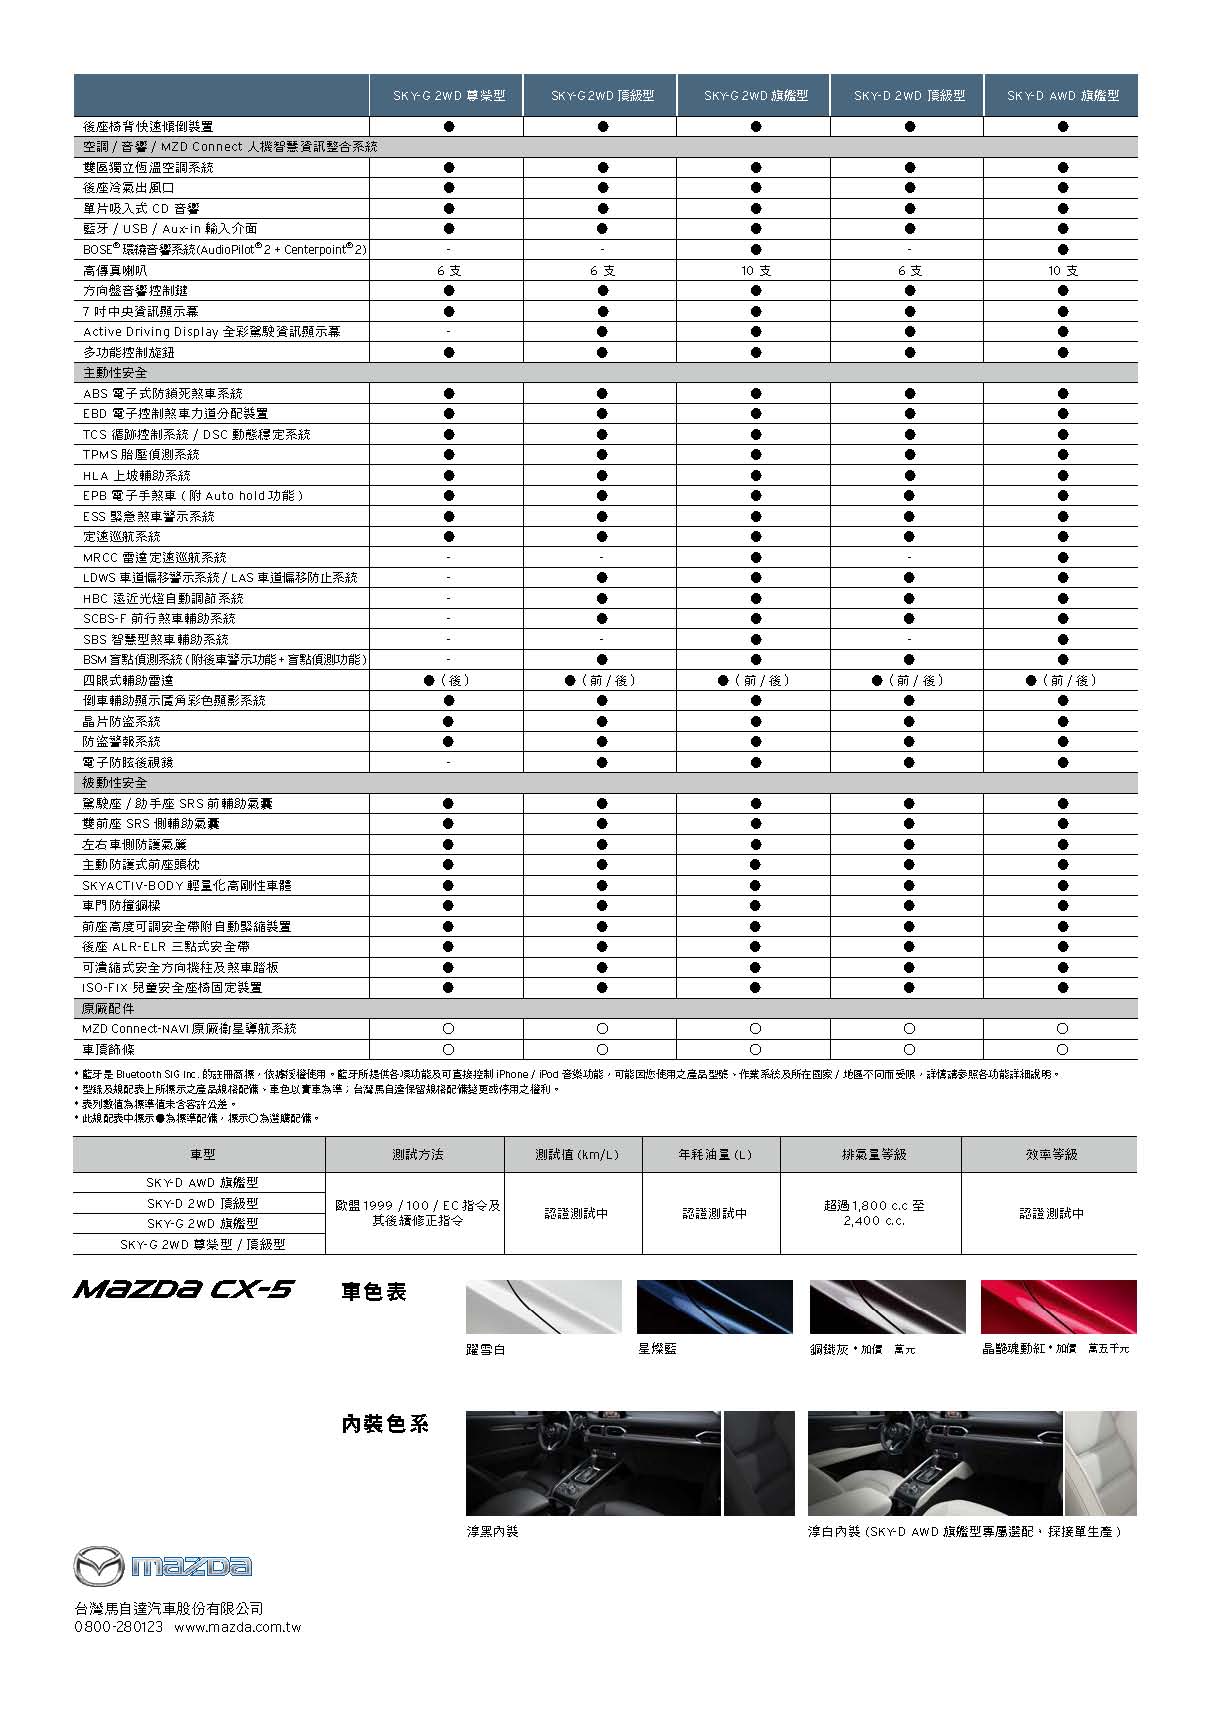 【MAZDA新聞附件】 All-new MAZDA CX-5「汽油旗艦型」配備說明_頁面_2